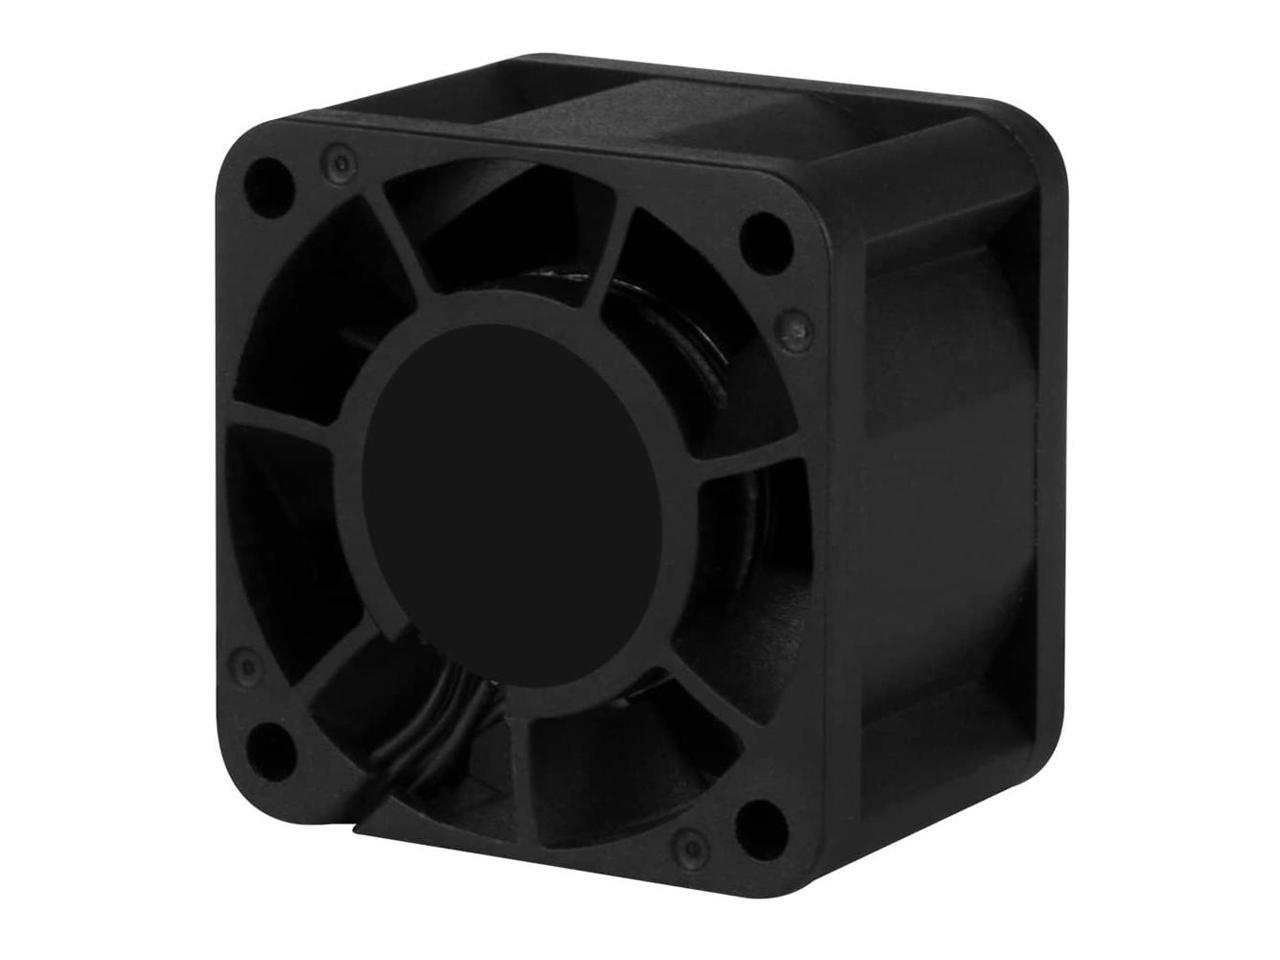 ARCTIC S4028-15K - 40x40x28 mm Fan, 1400-15000 RPM, PWM Regulated, 4-pin Connector, 12 V DC - Black